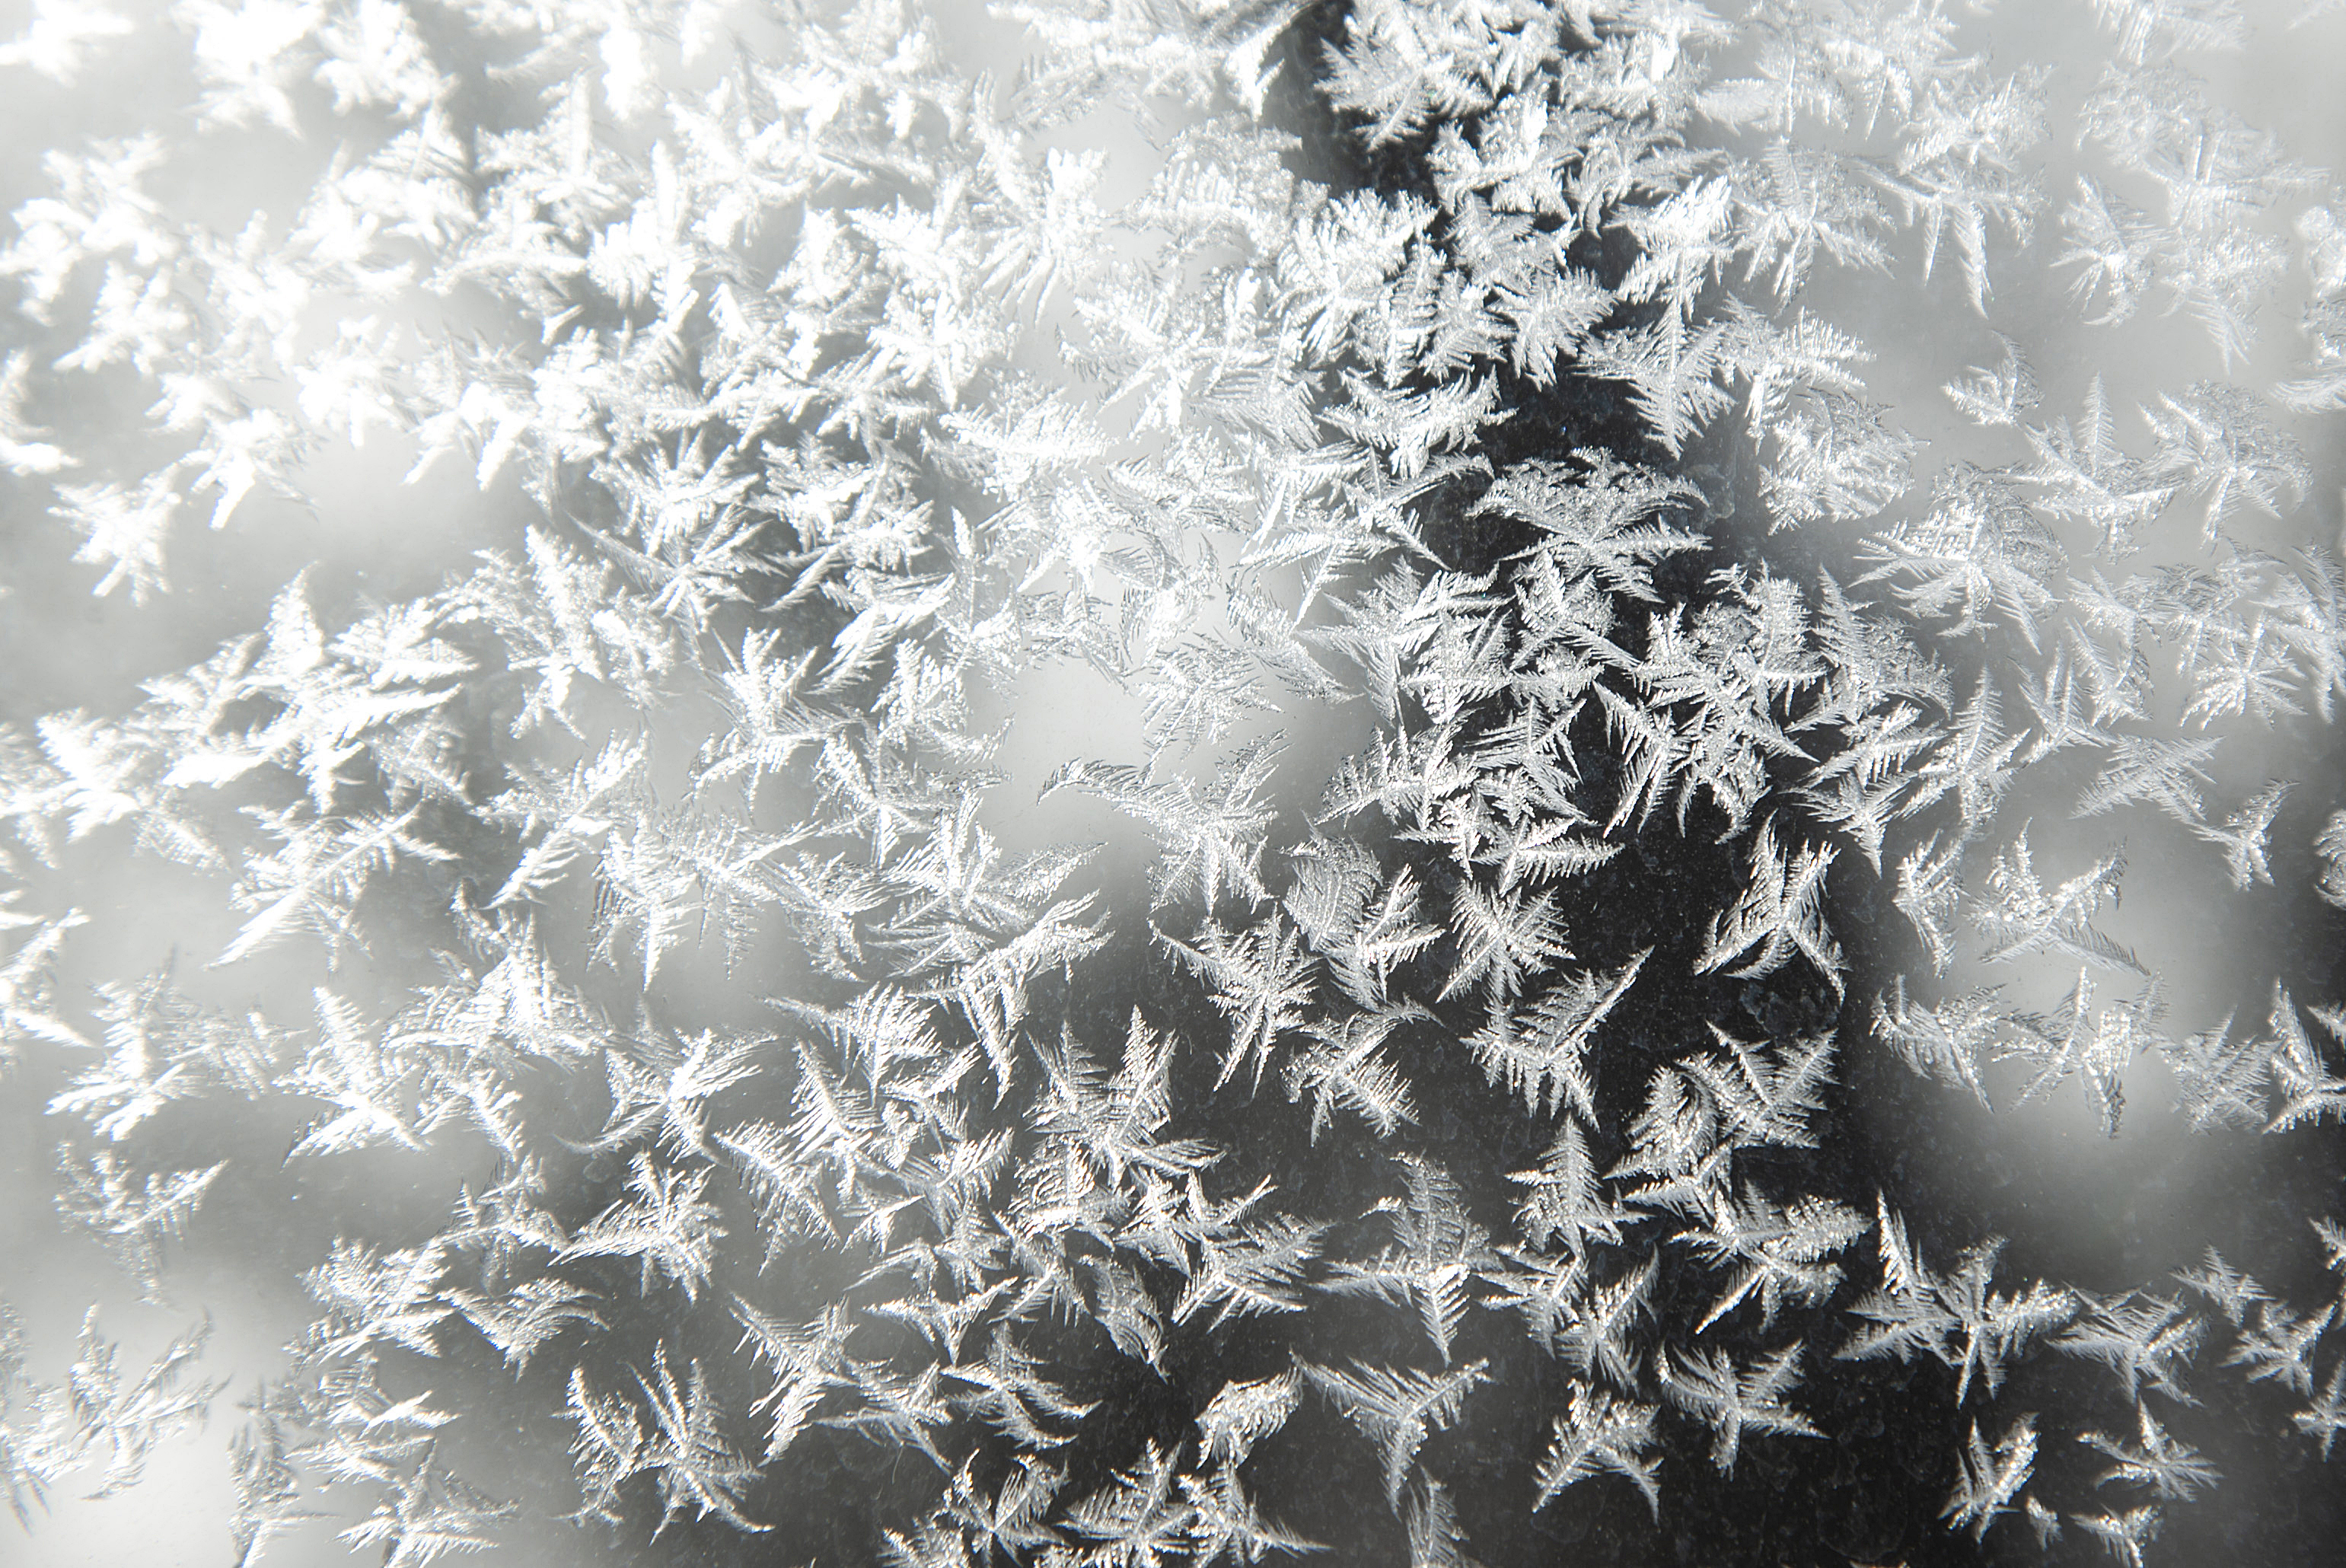 Frost forms on a storm window as temperatures remain below zero Fahrenheit during a blizzard warning, Friday, Dec. 23, 2022, in Iowa City, Iowa. (Joseph Cress/Iowa City Press-Citizen via AP)